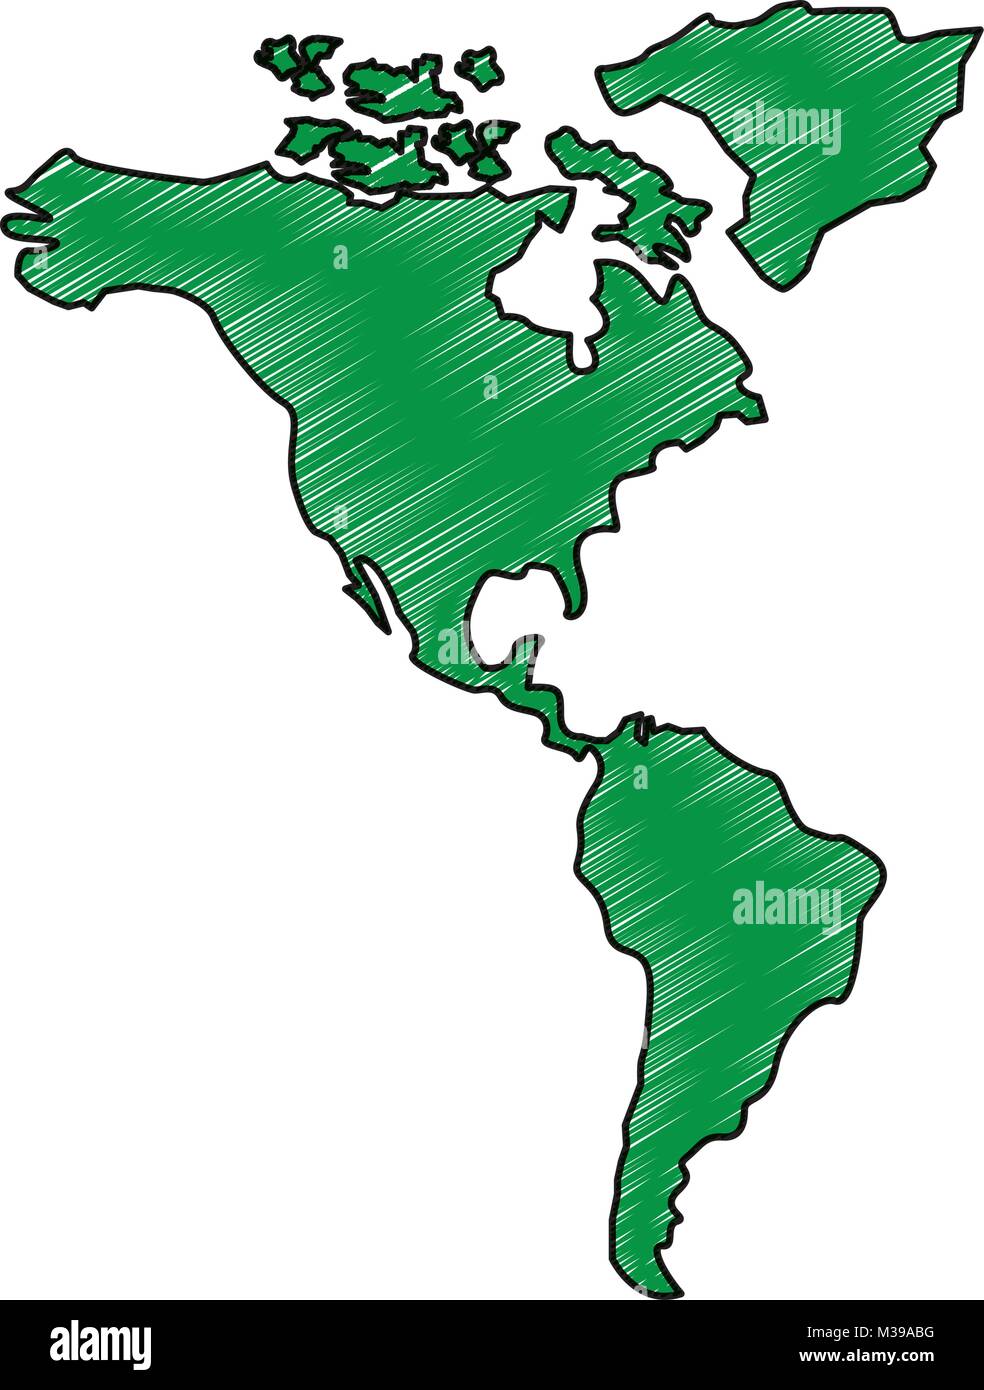 Nord- und Südamerika Karte Kontinent Stock-Vektorgrafik - Alamy